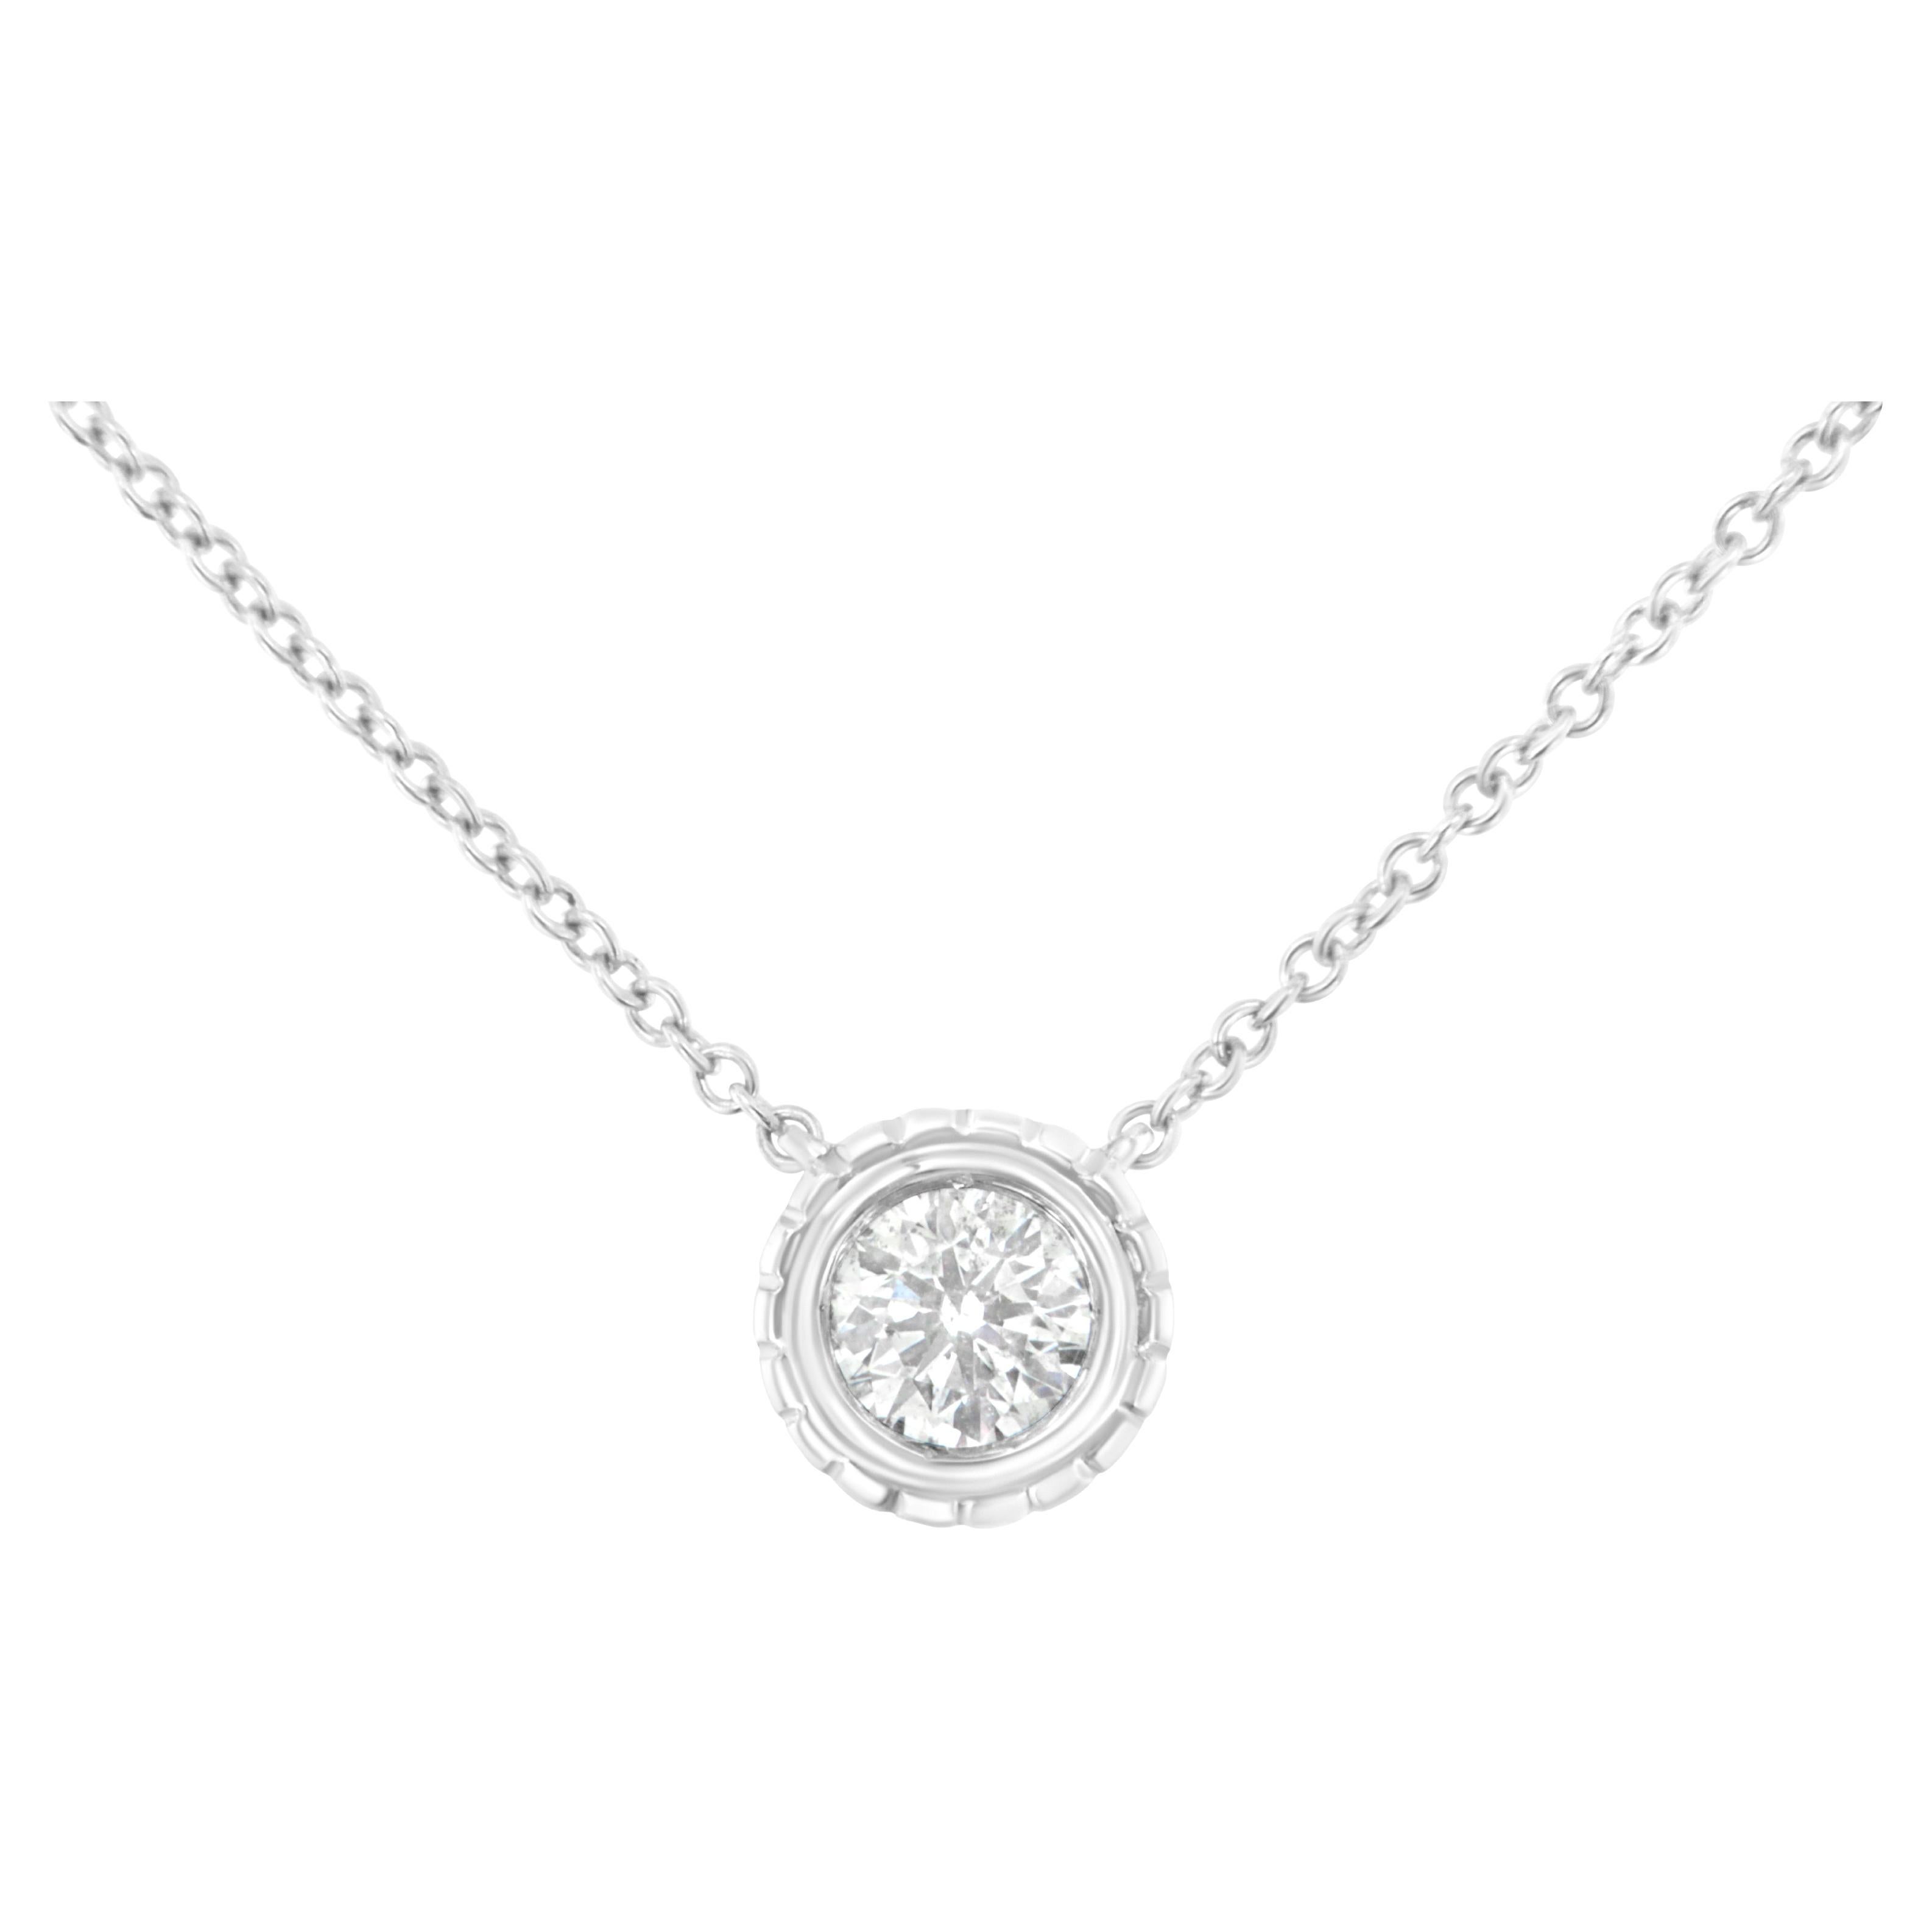 10K White Gold 1/4 Carat Diamond Solitaire Chakra Style Pendant Necklace